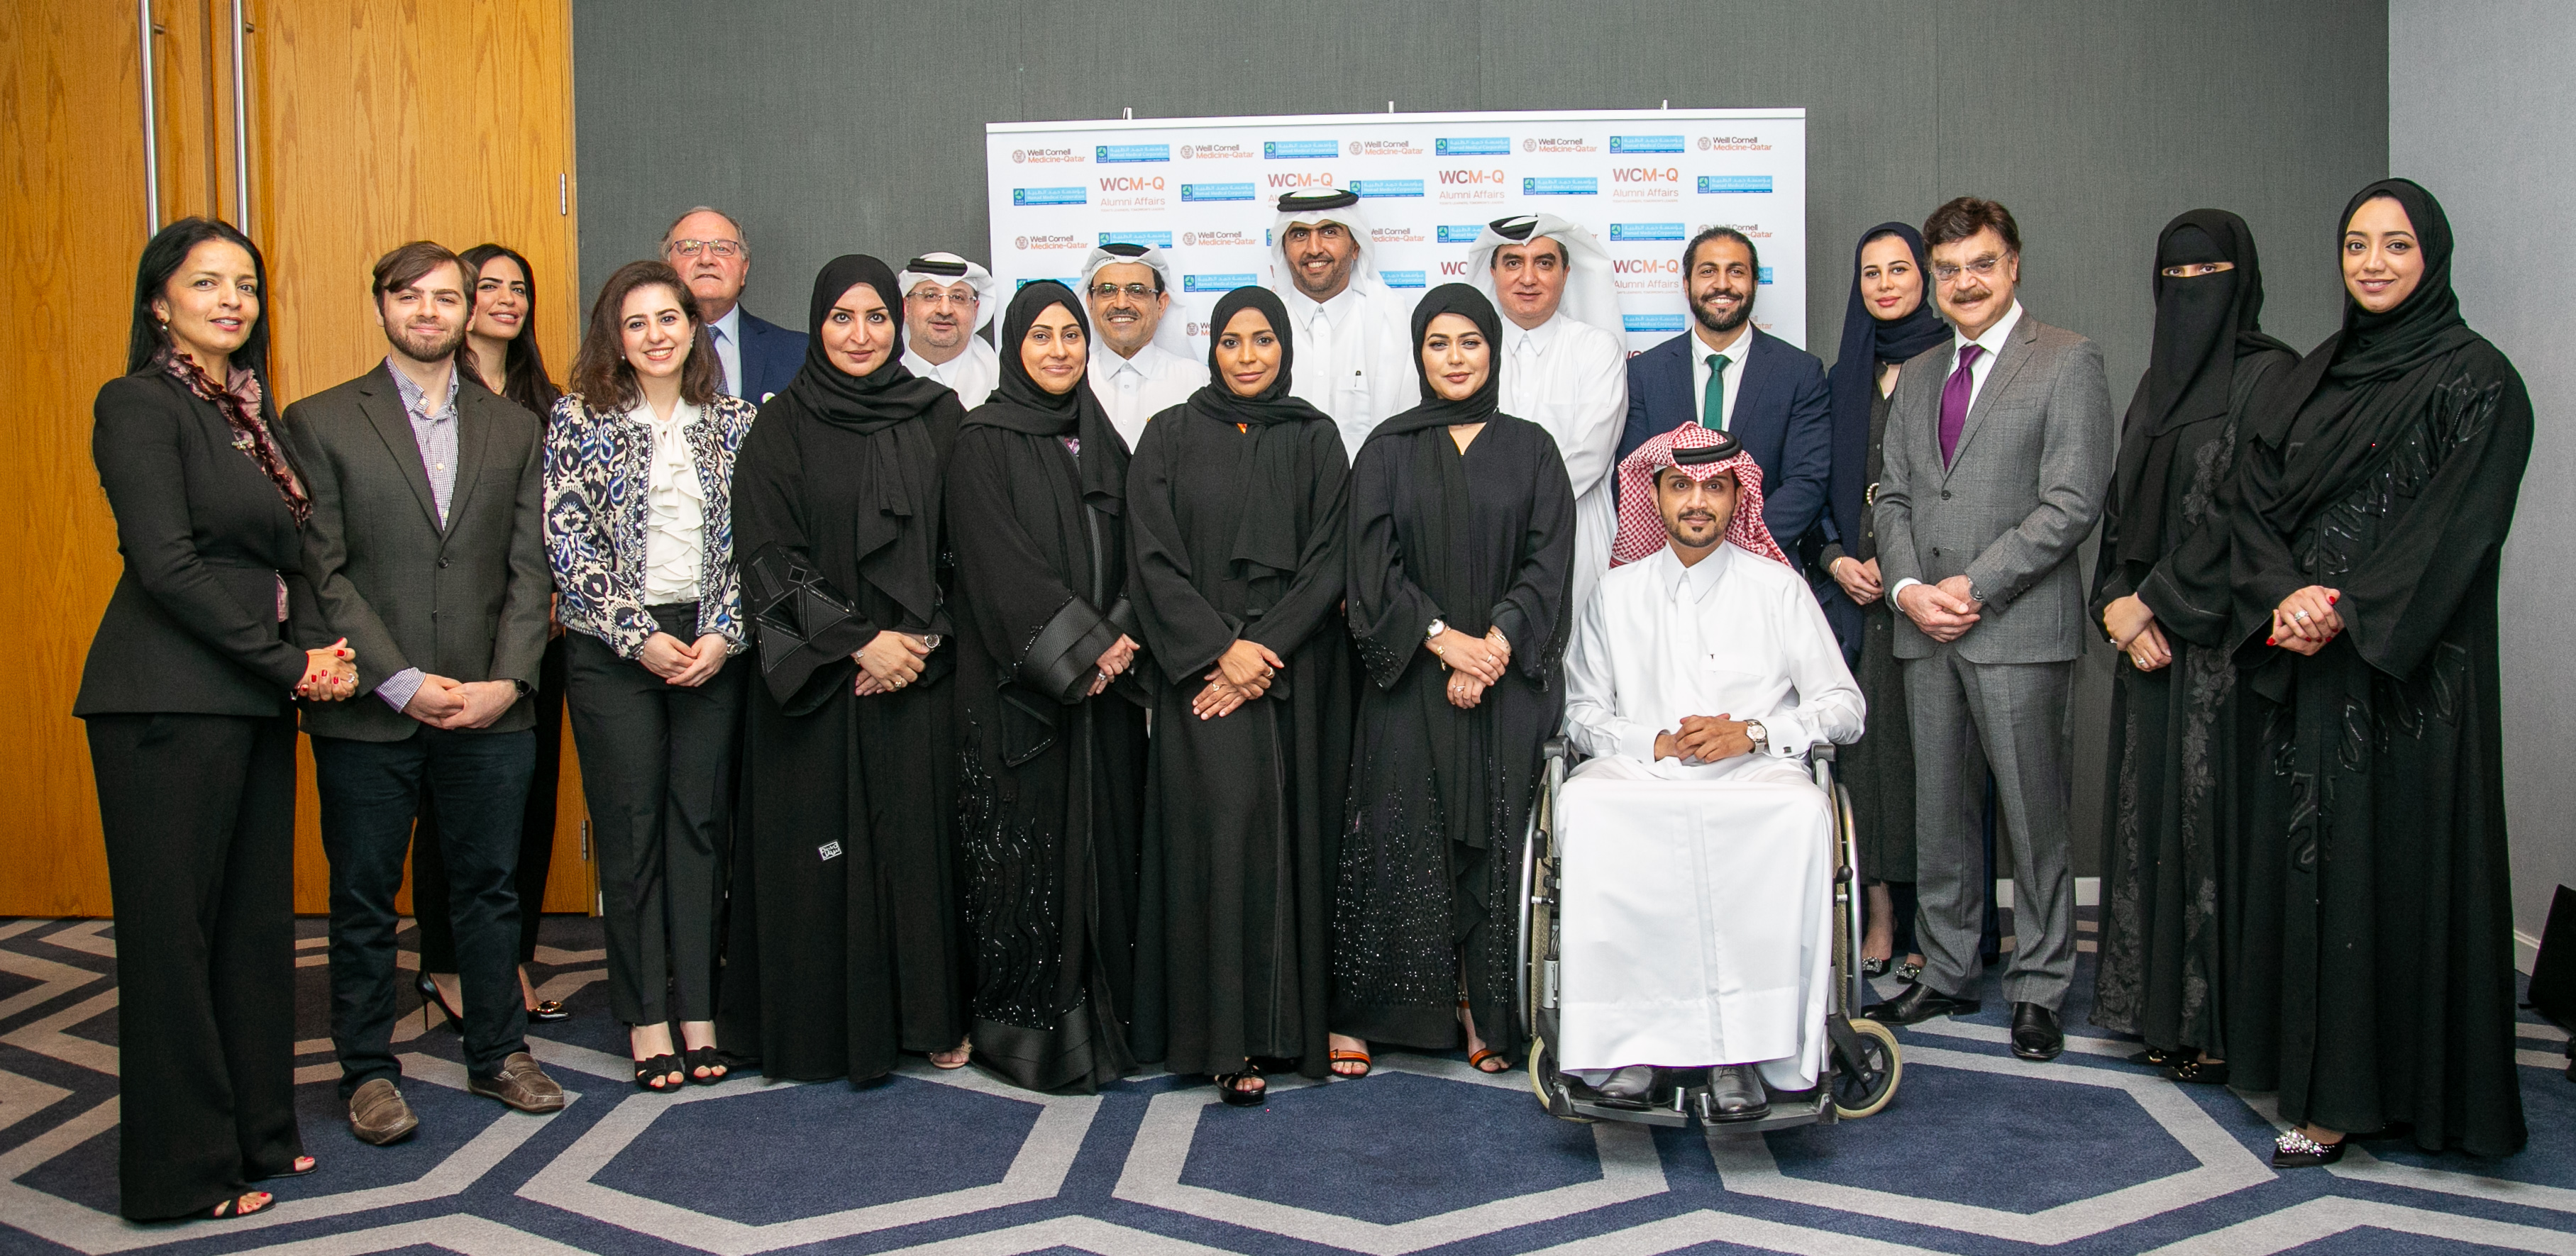 WCM-Q and HMC help develop Qatar’s medical leaders